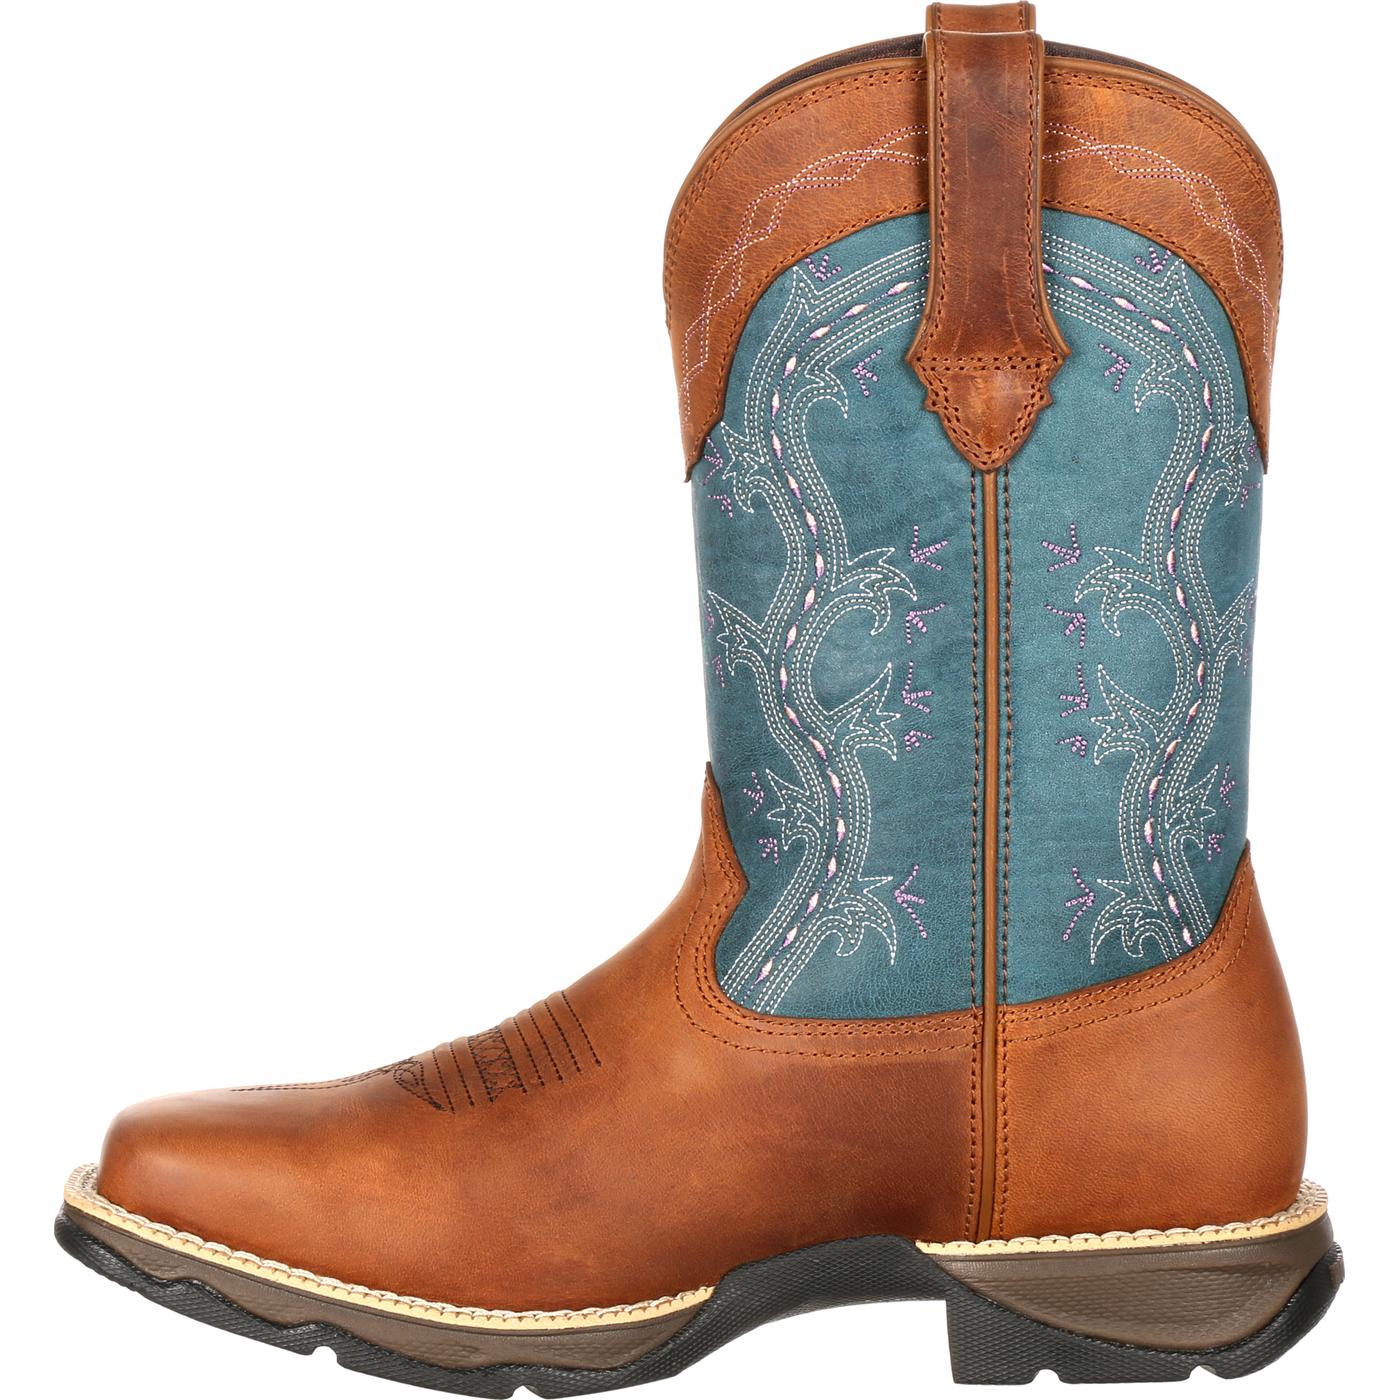 Lady Rebel by Durango - Women's Teal Blue Western Boots